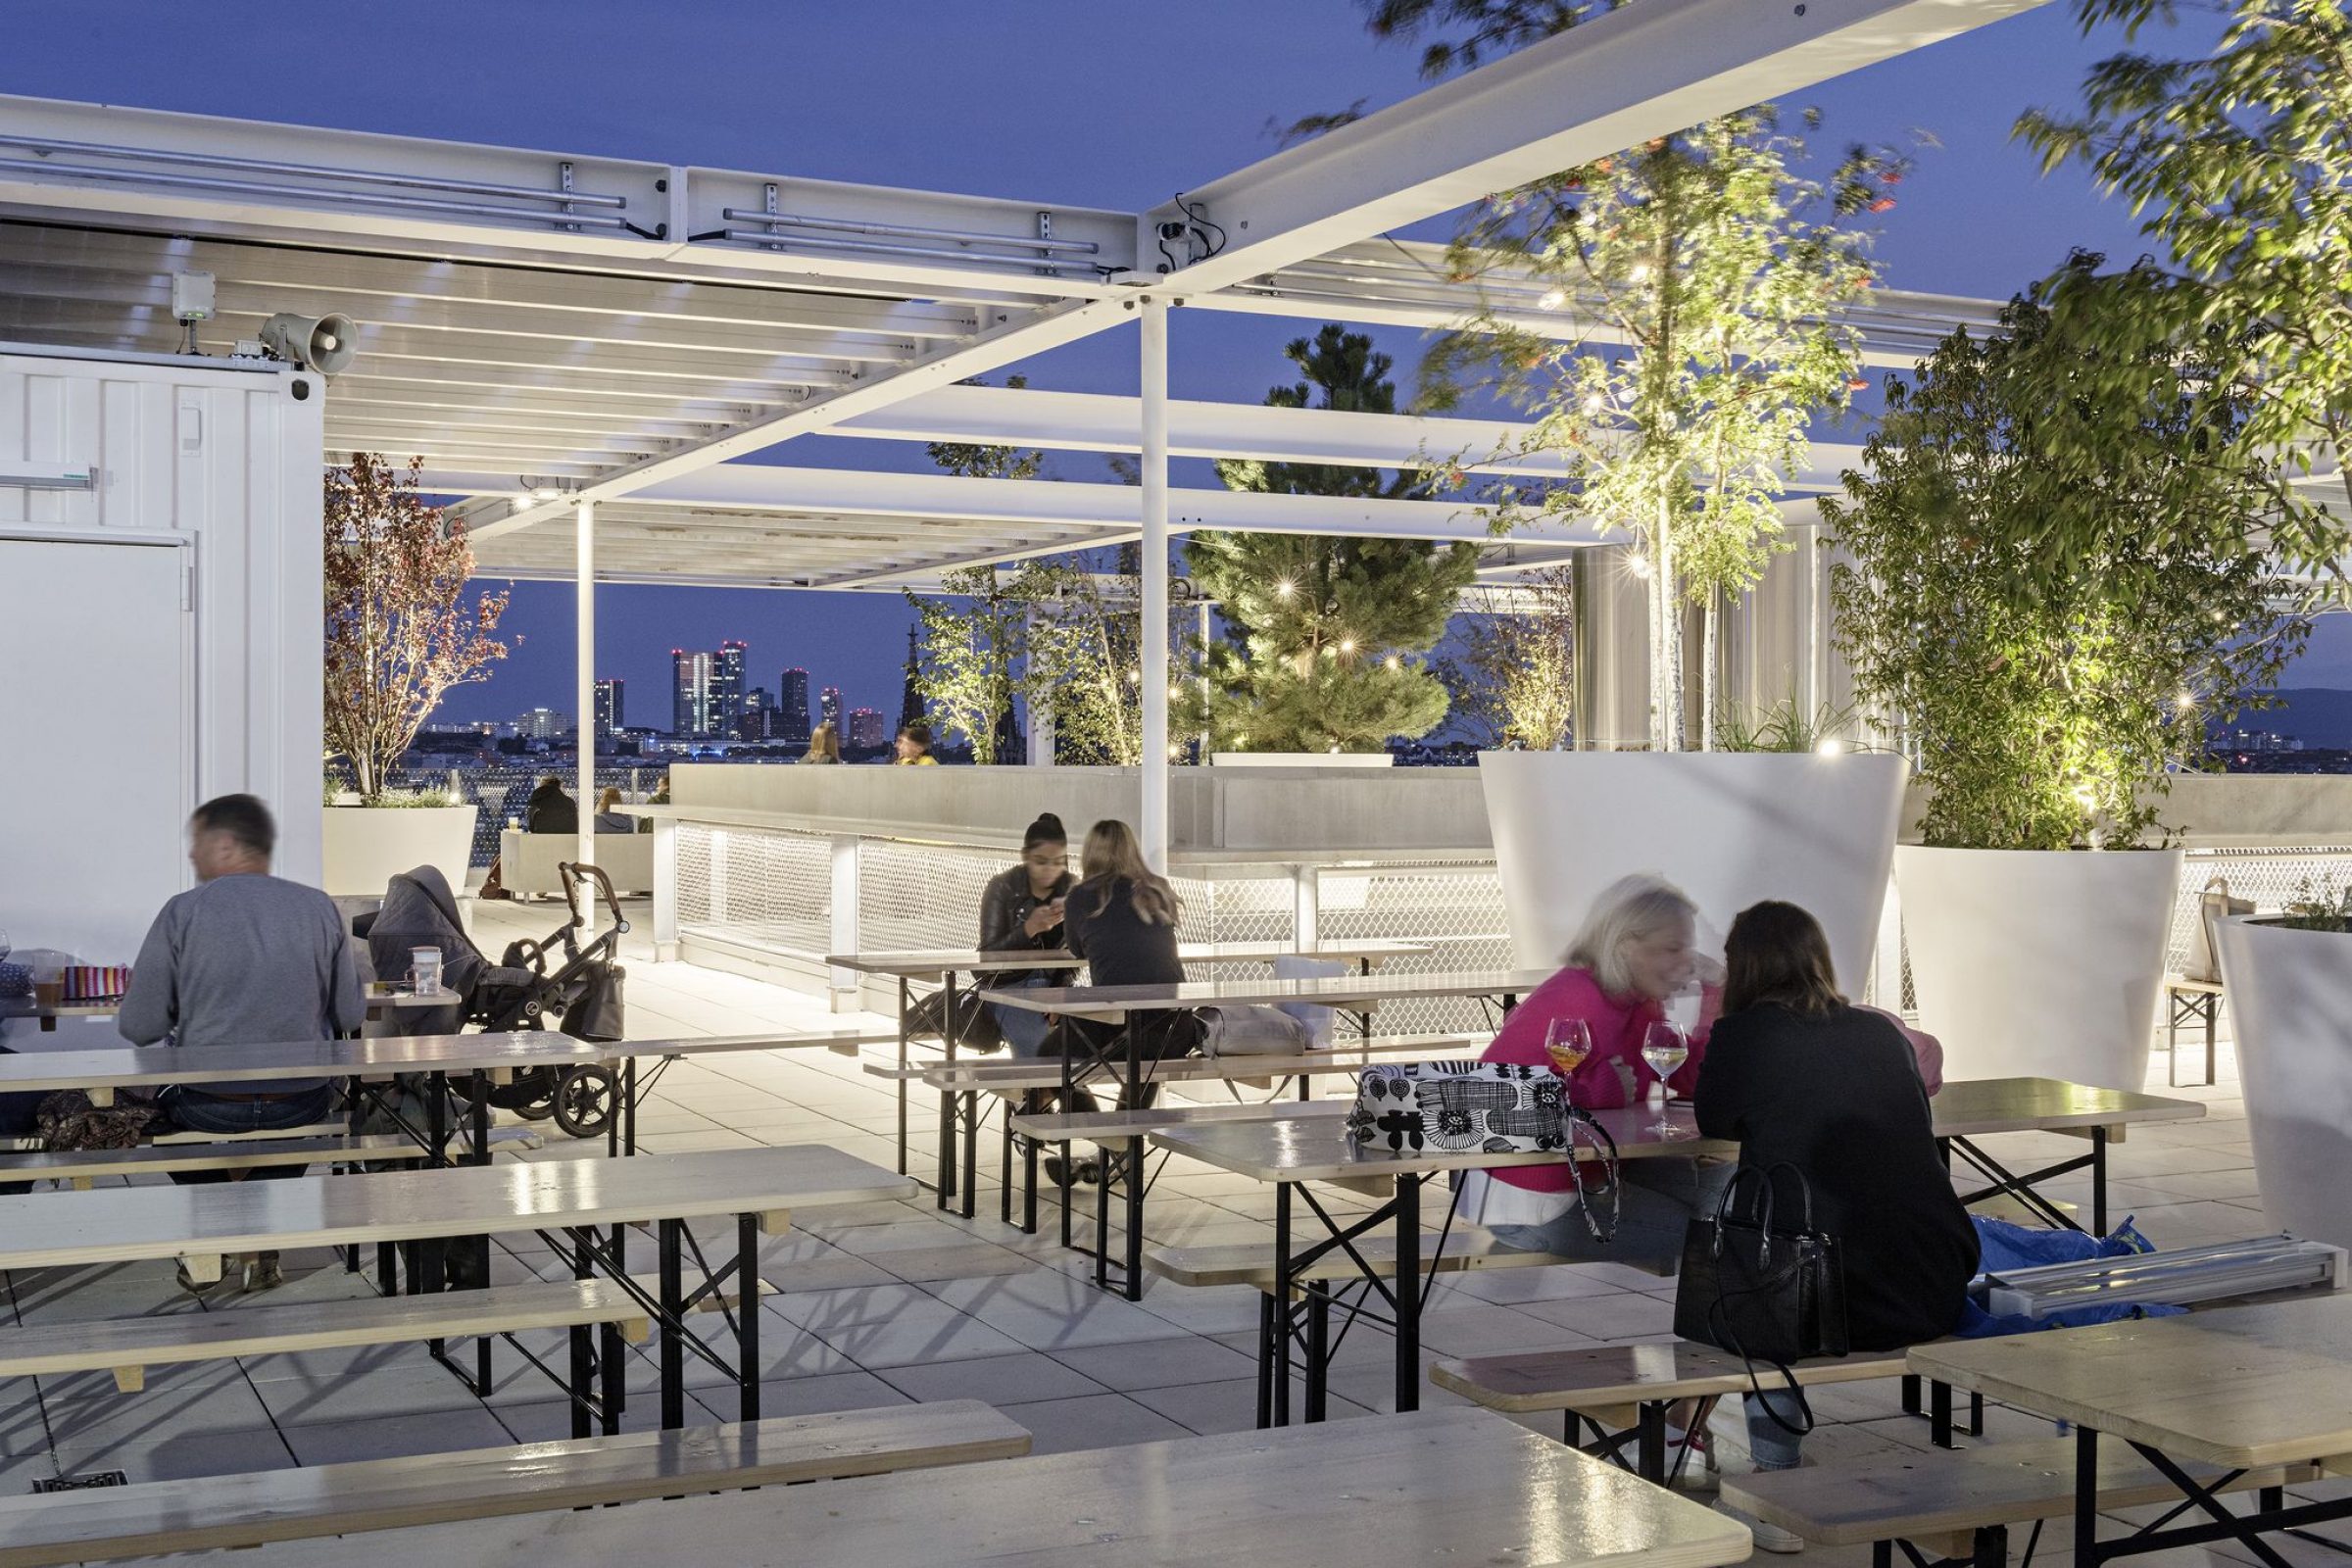 New IKEA Shop and Hostel with Public Roof | Querkraft Architekten ...